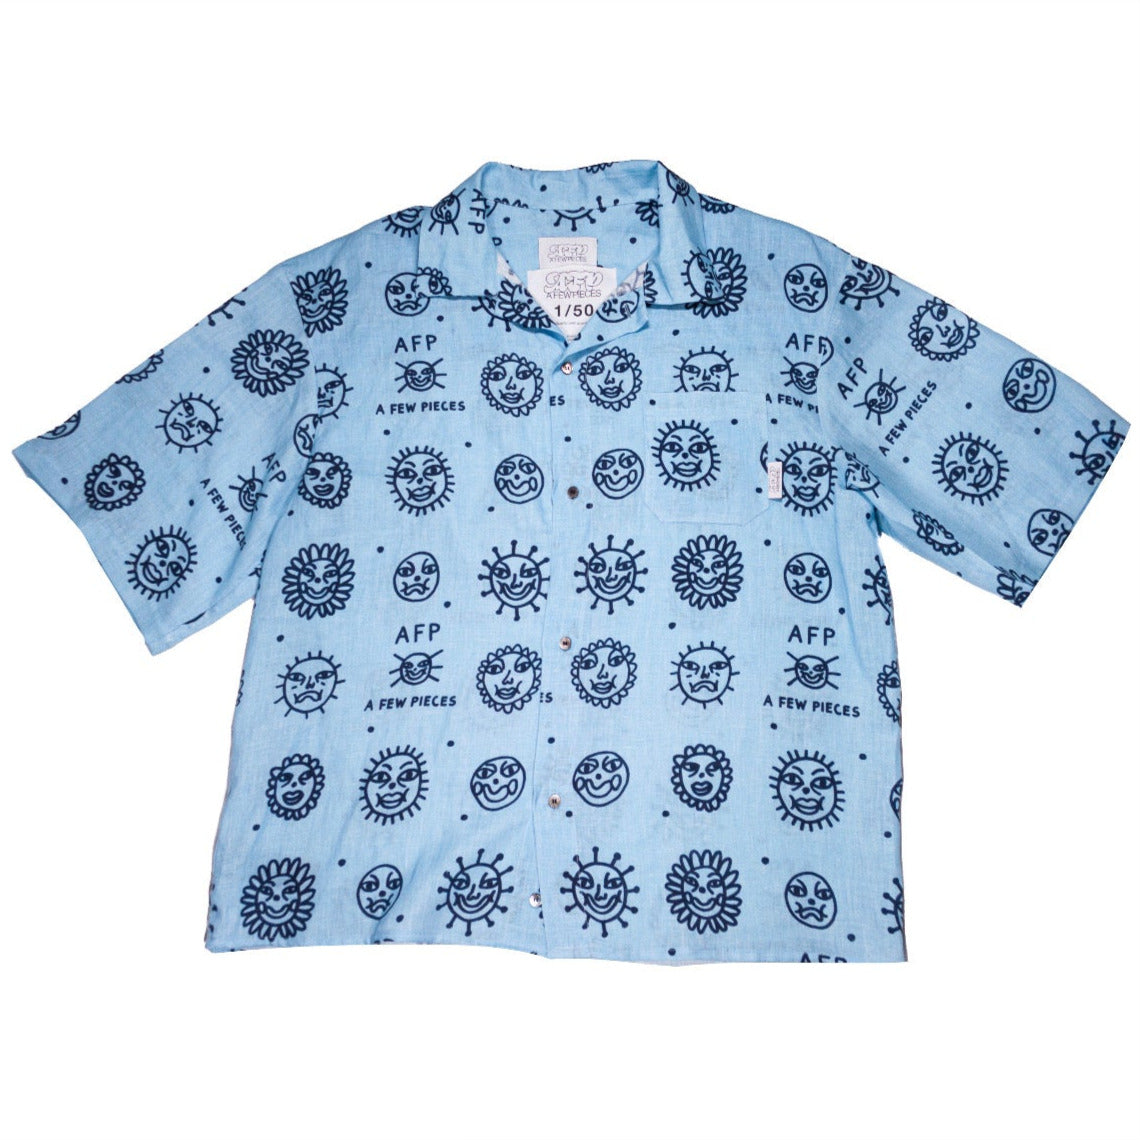 Kimono/shirt - Designed by Indrè Svirplytè